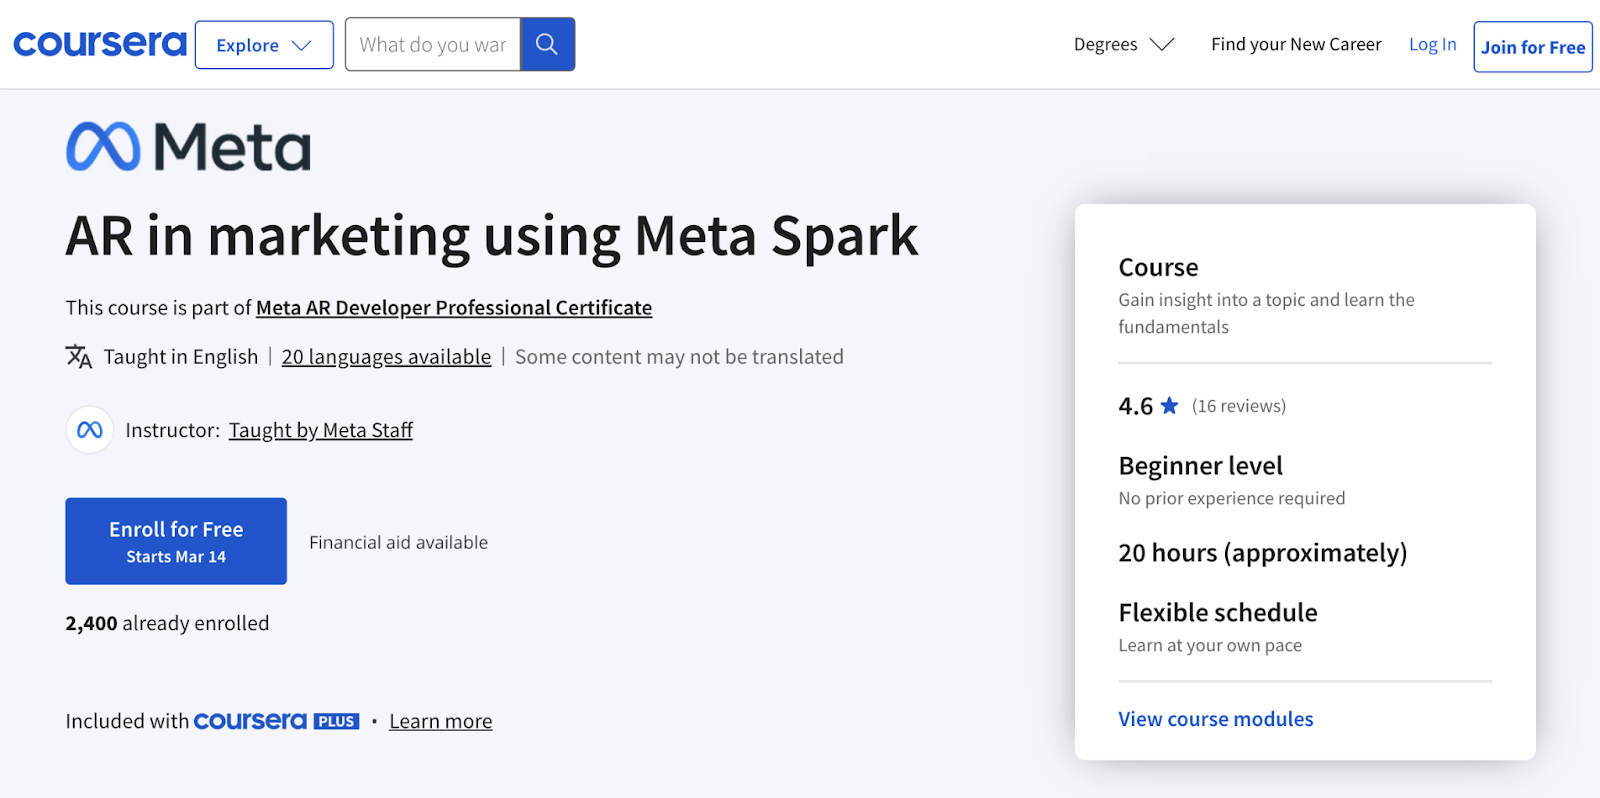 AR in Marketing Using Meta Spark course